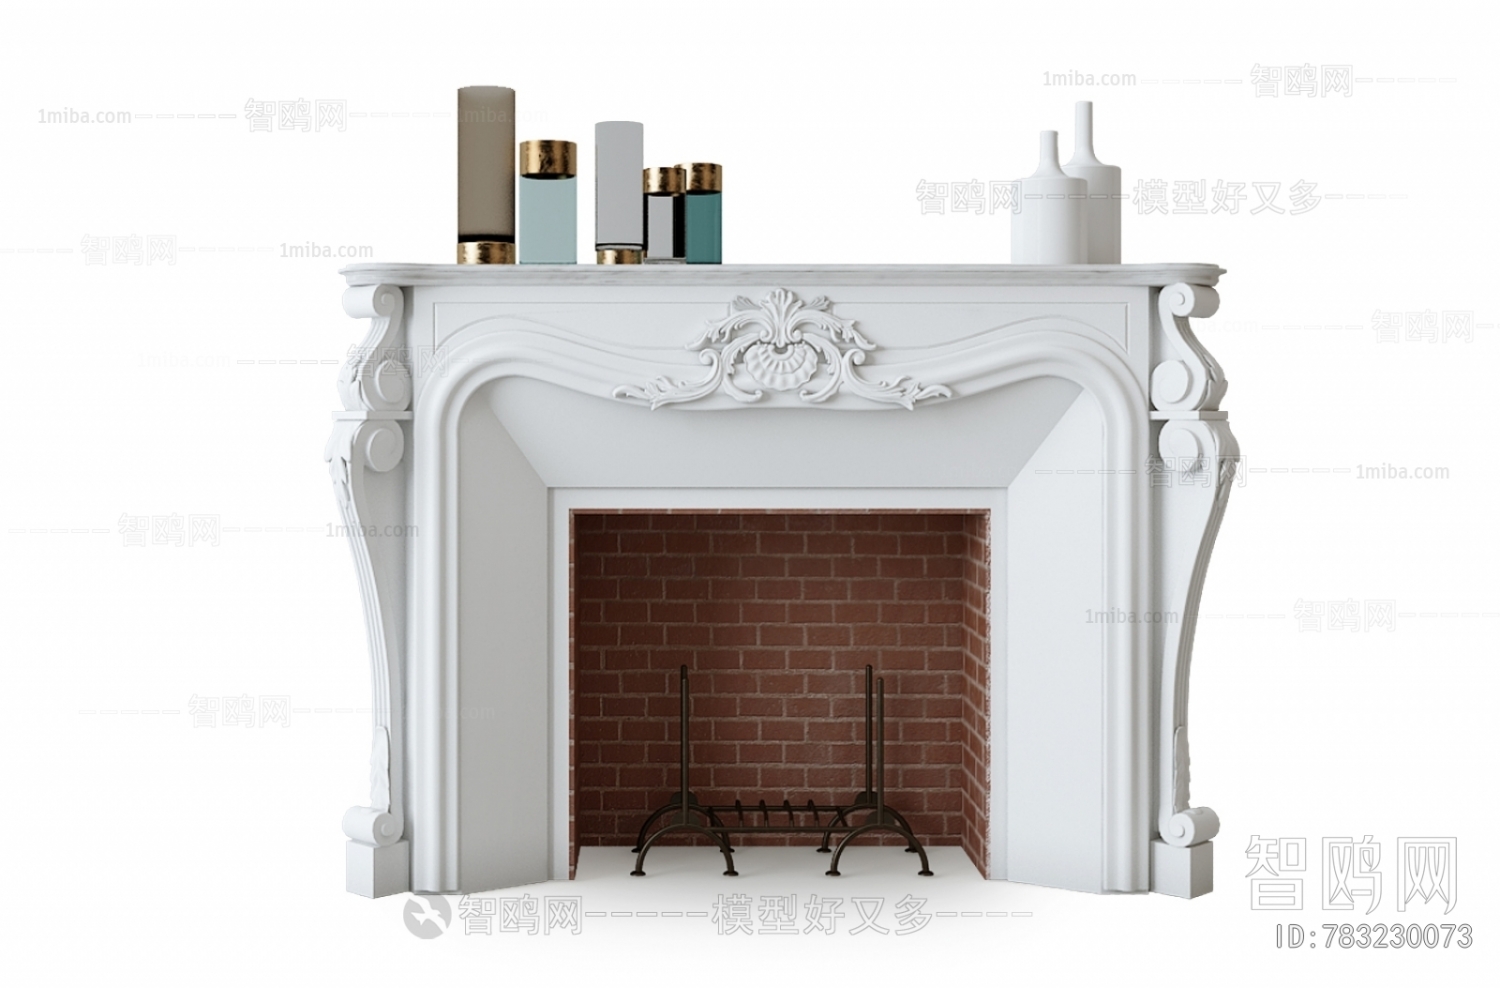 European Style Fireplace